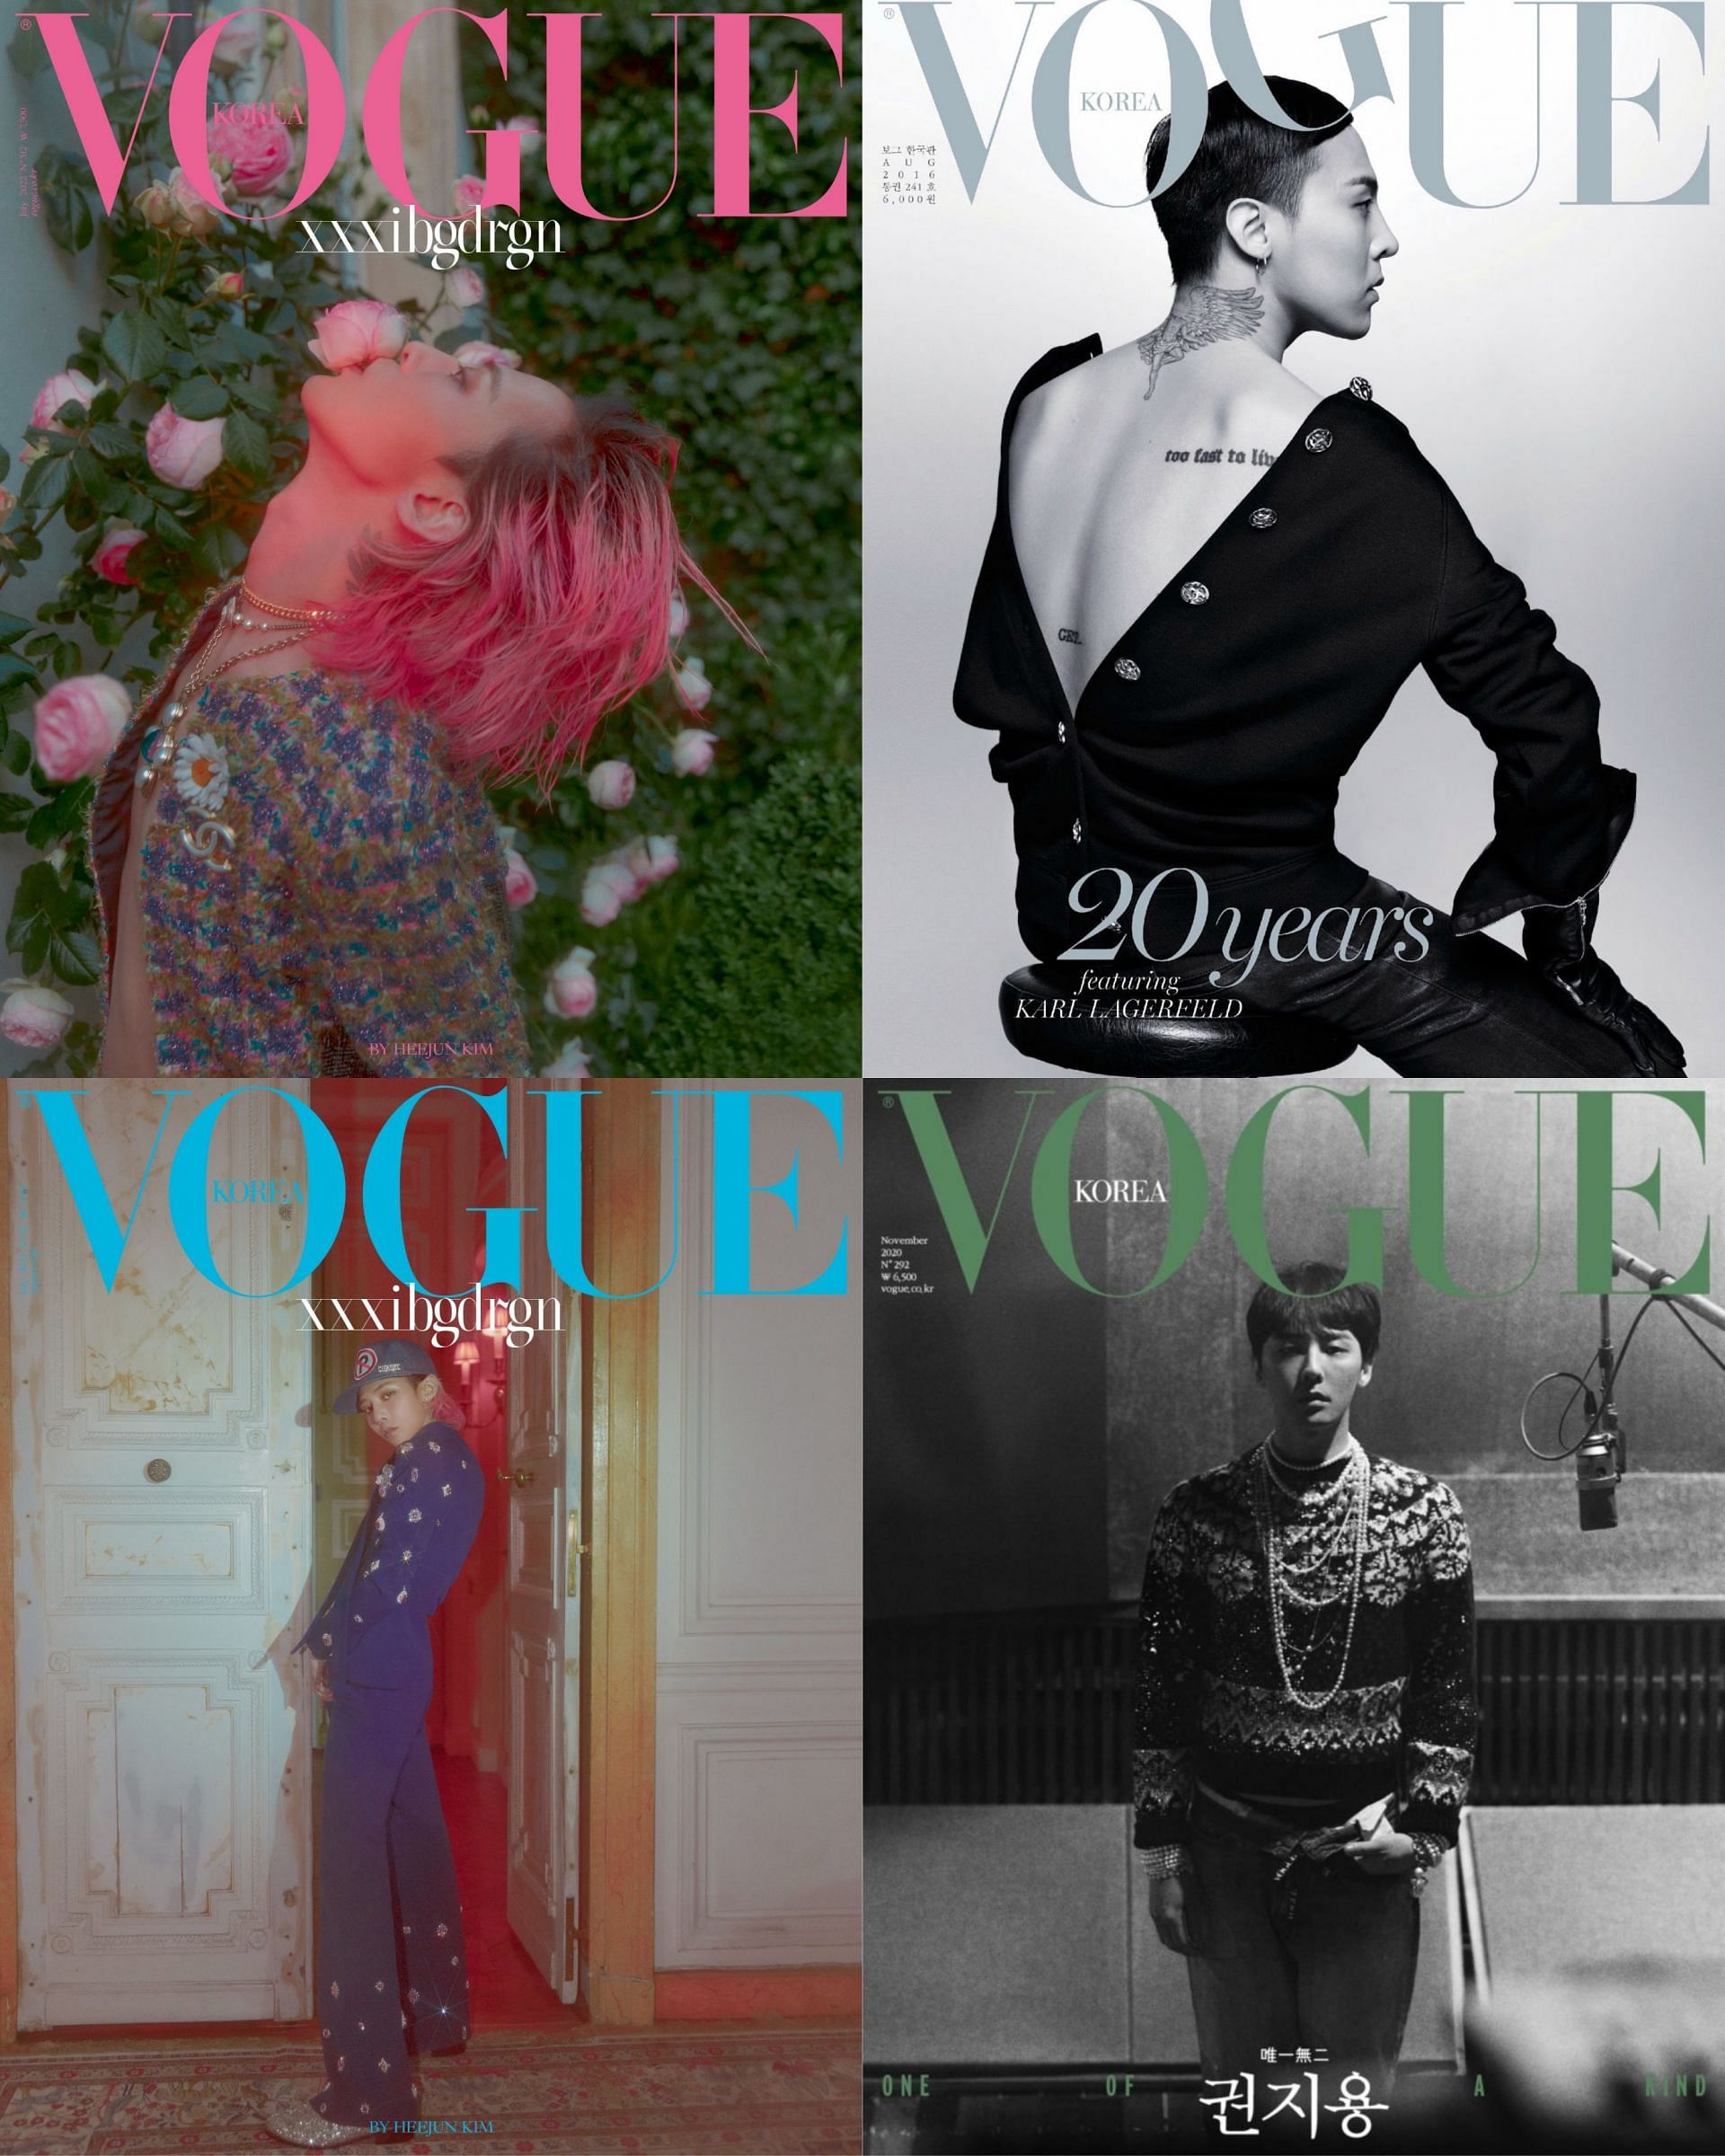 G-Dragon graces the cover of Vogue Korea